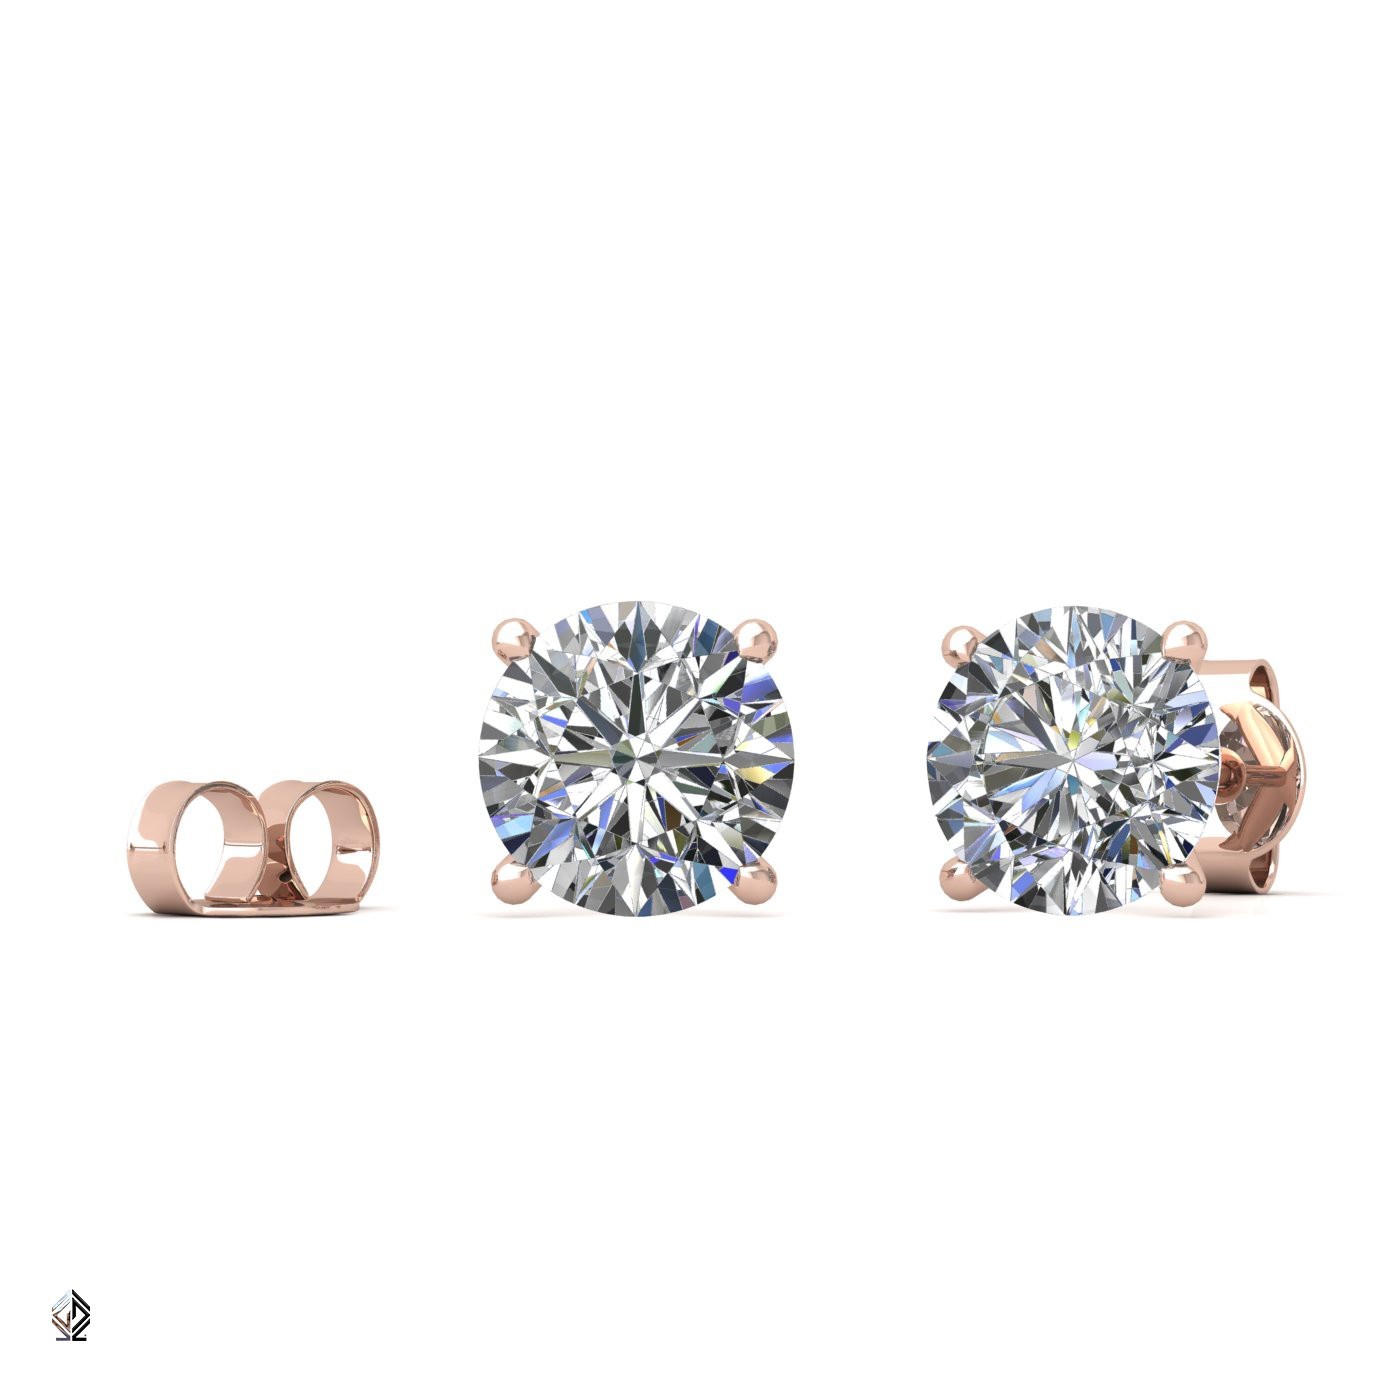 18k rose gold 1.0 ct each (2,0 tcw) 4 prongs round cut classic diamond earring studs